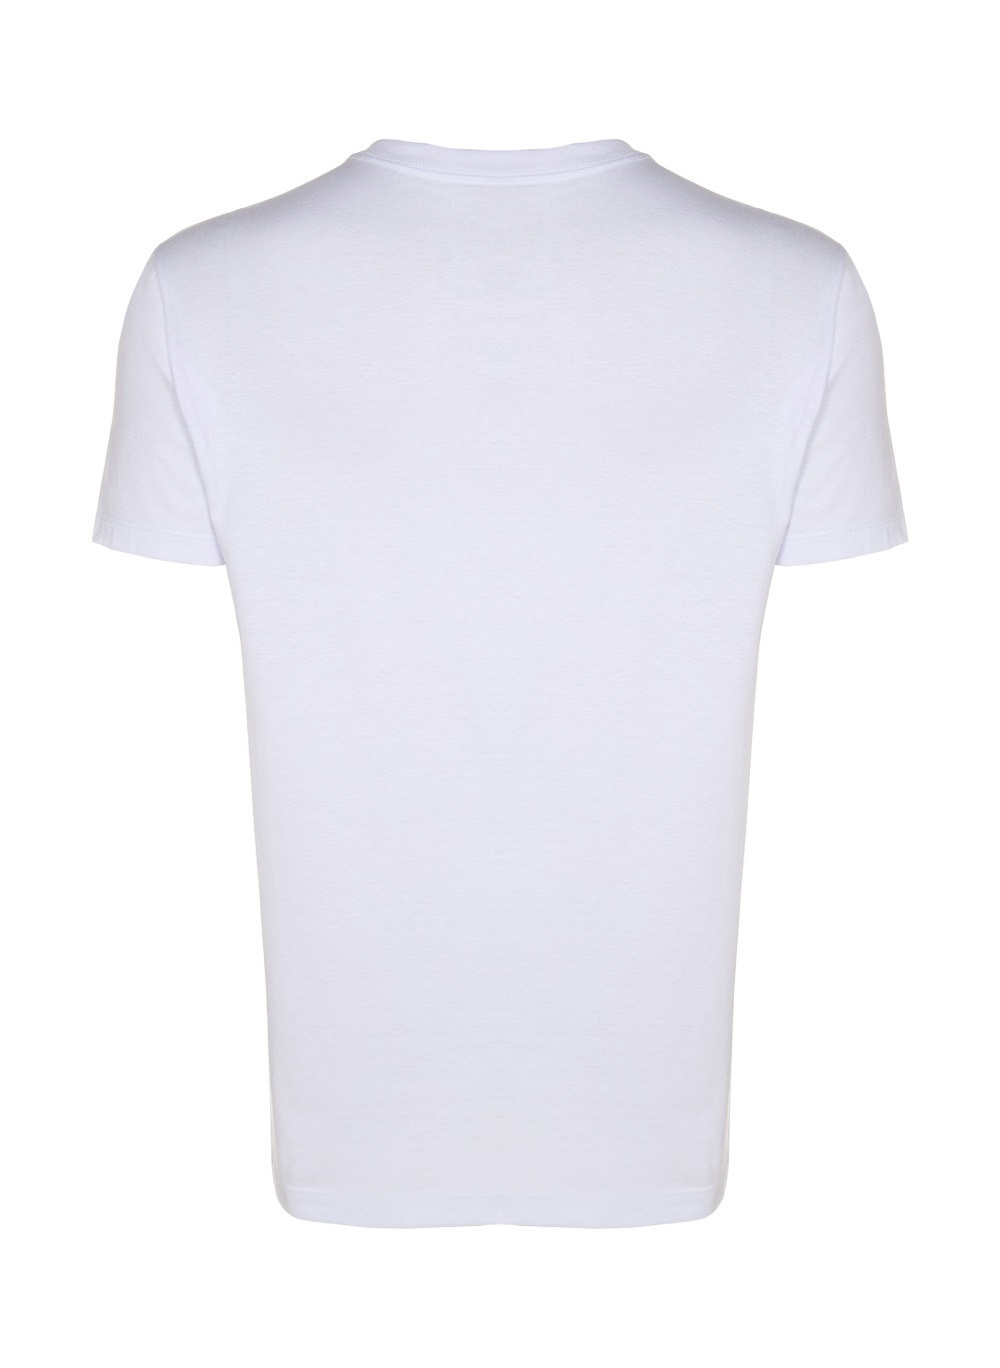 Camiseta John John Masculina Regular Splashed Live It Branca - Branco